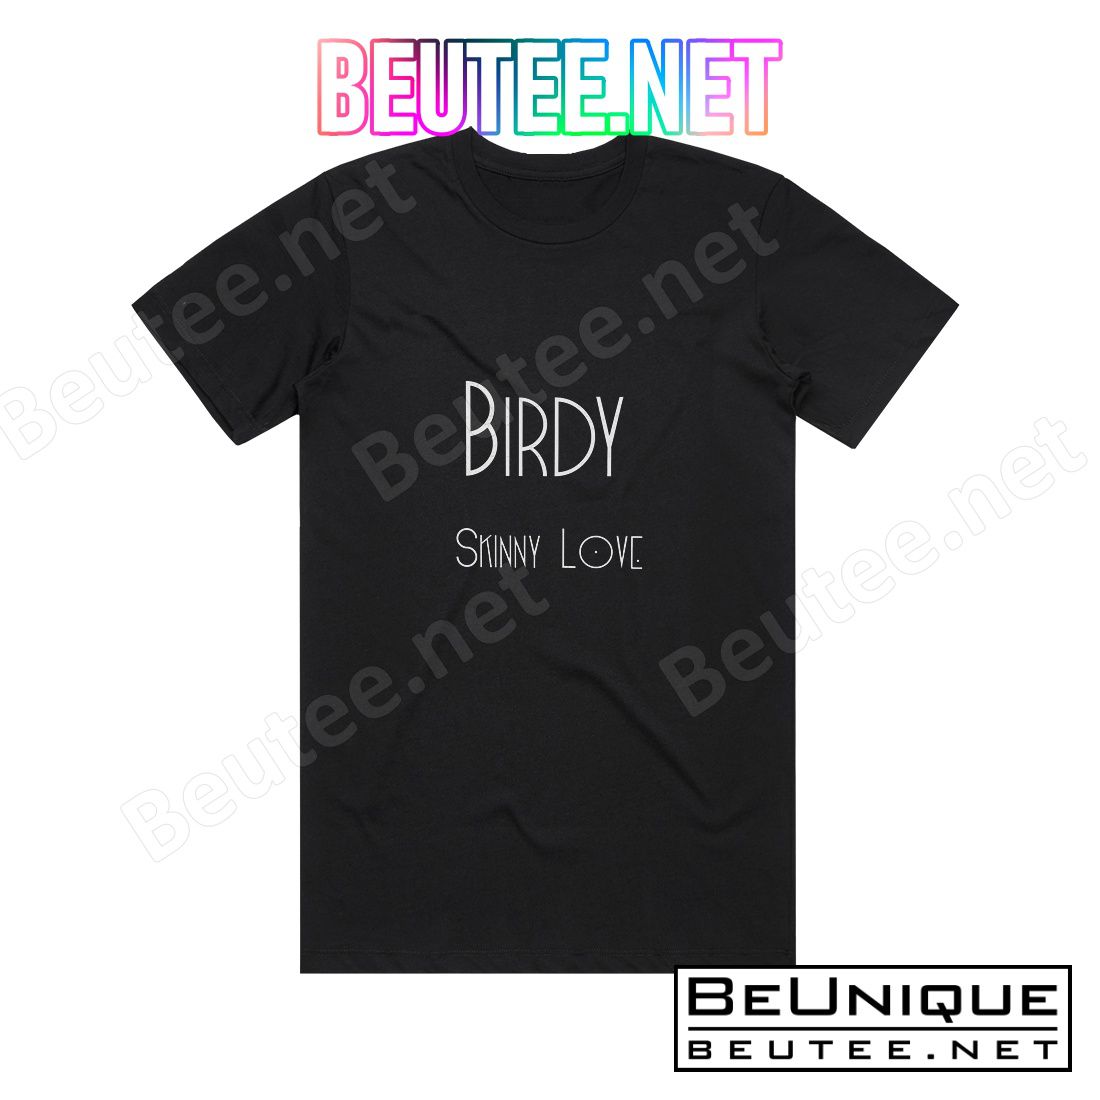 Birdy Skinny Love Album Cover T-Shirt